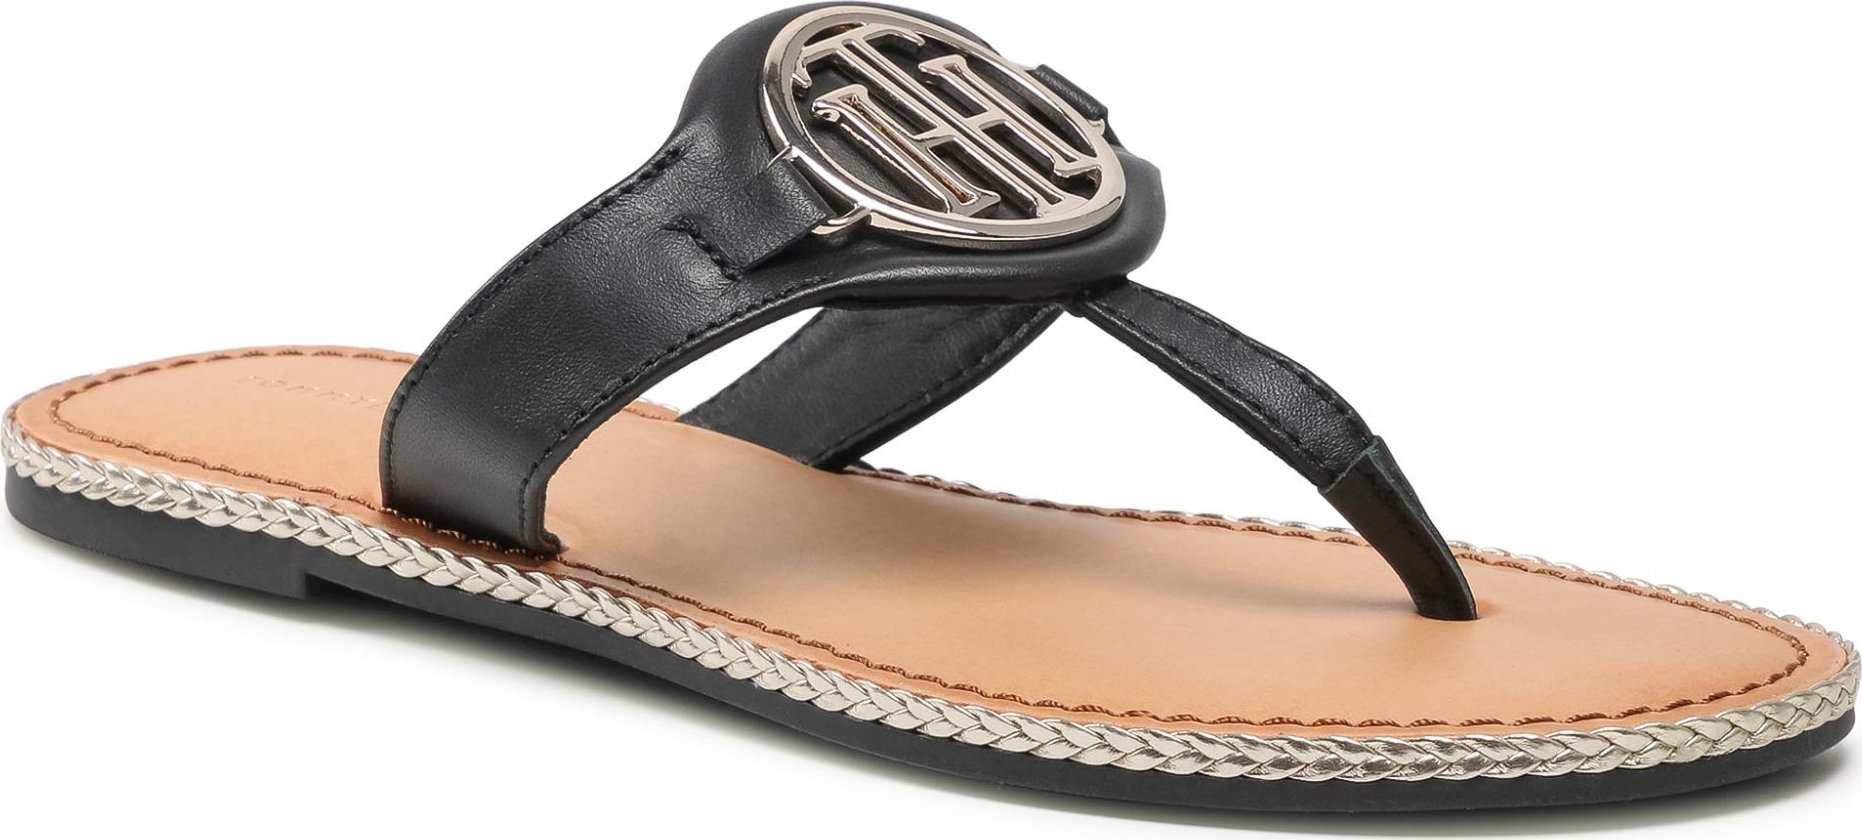 TOMMY HILFIGER Essential Leather Flat Sandal